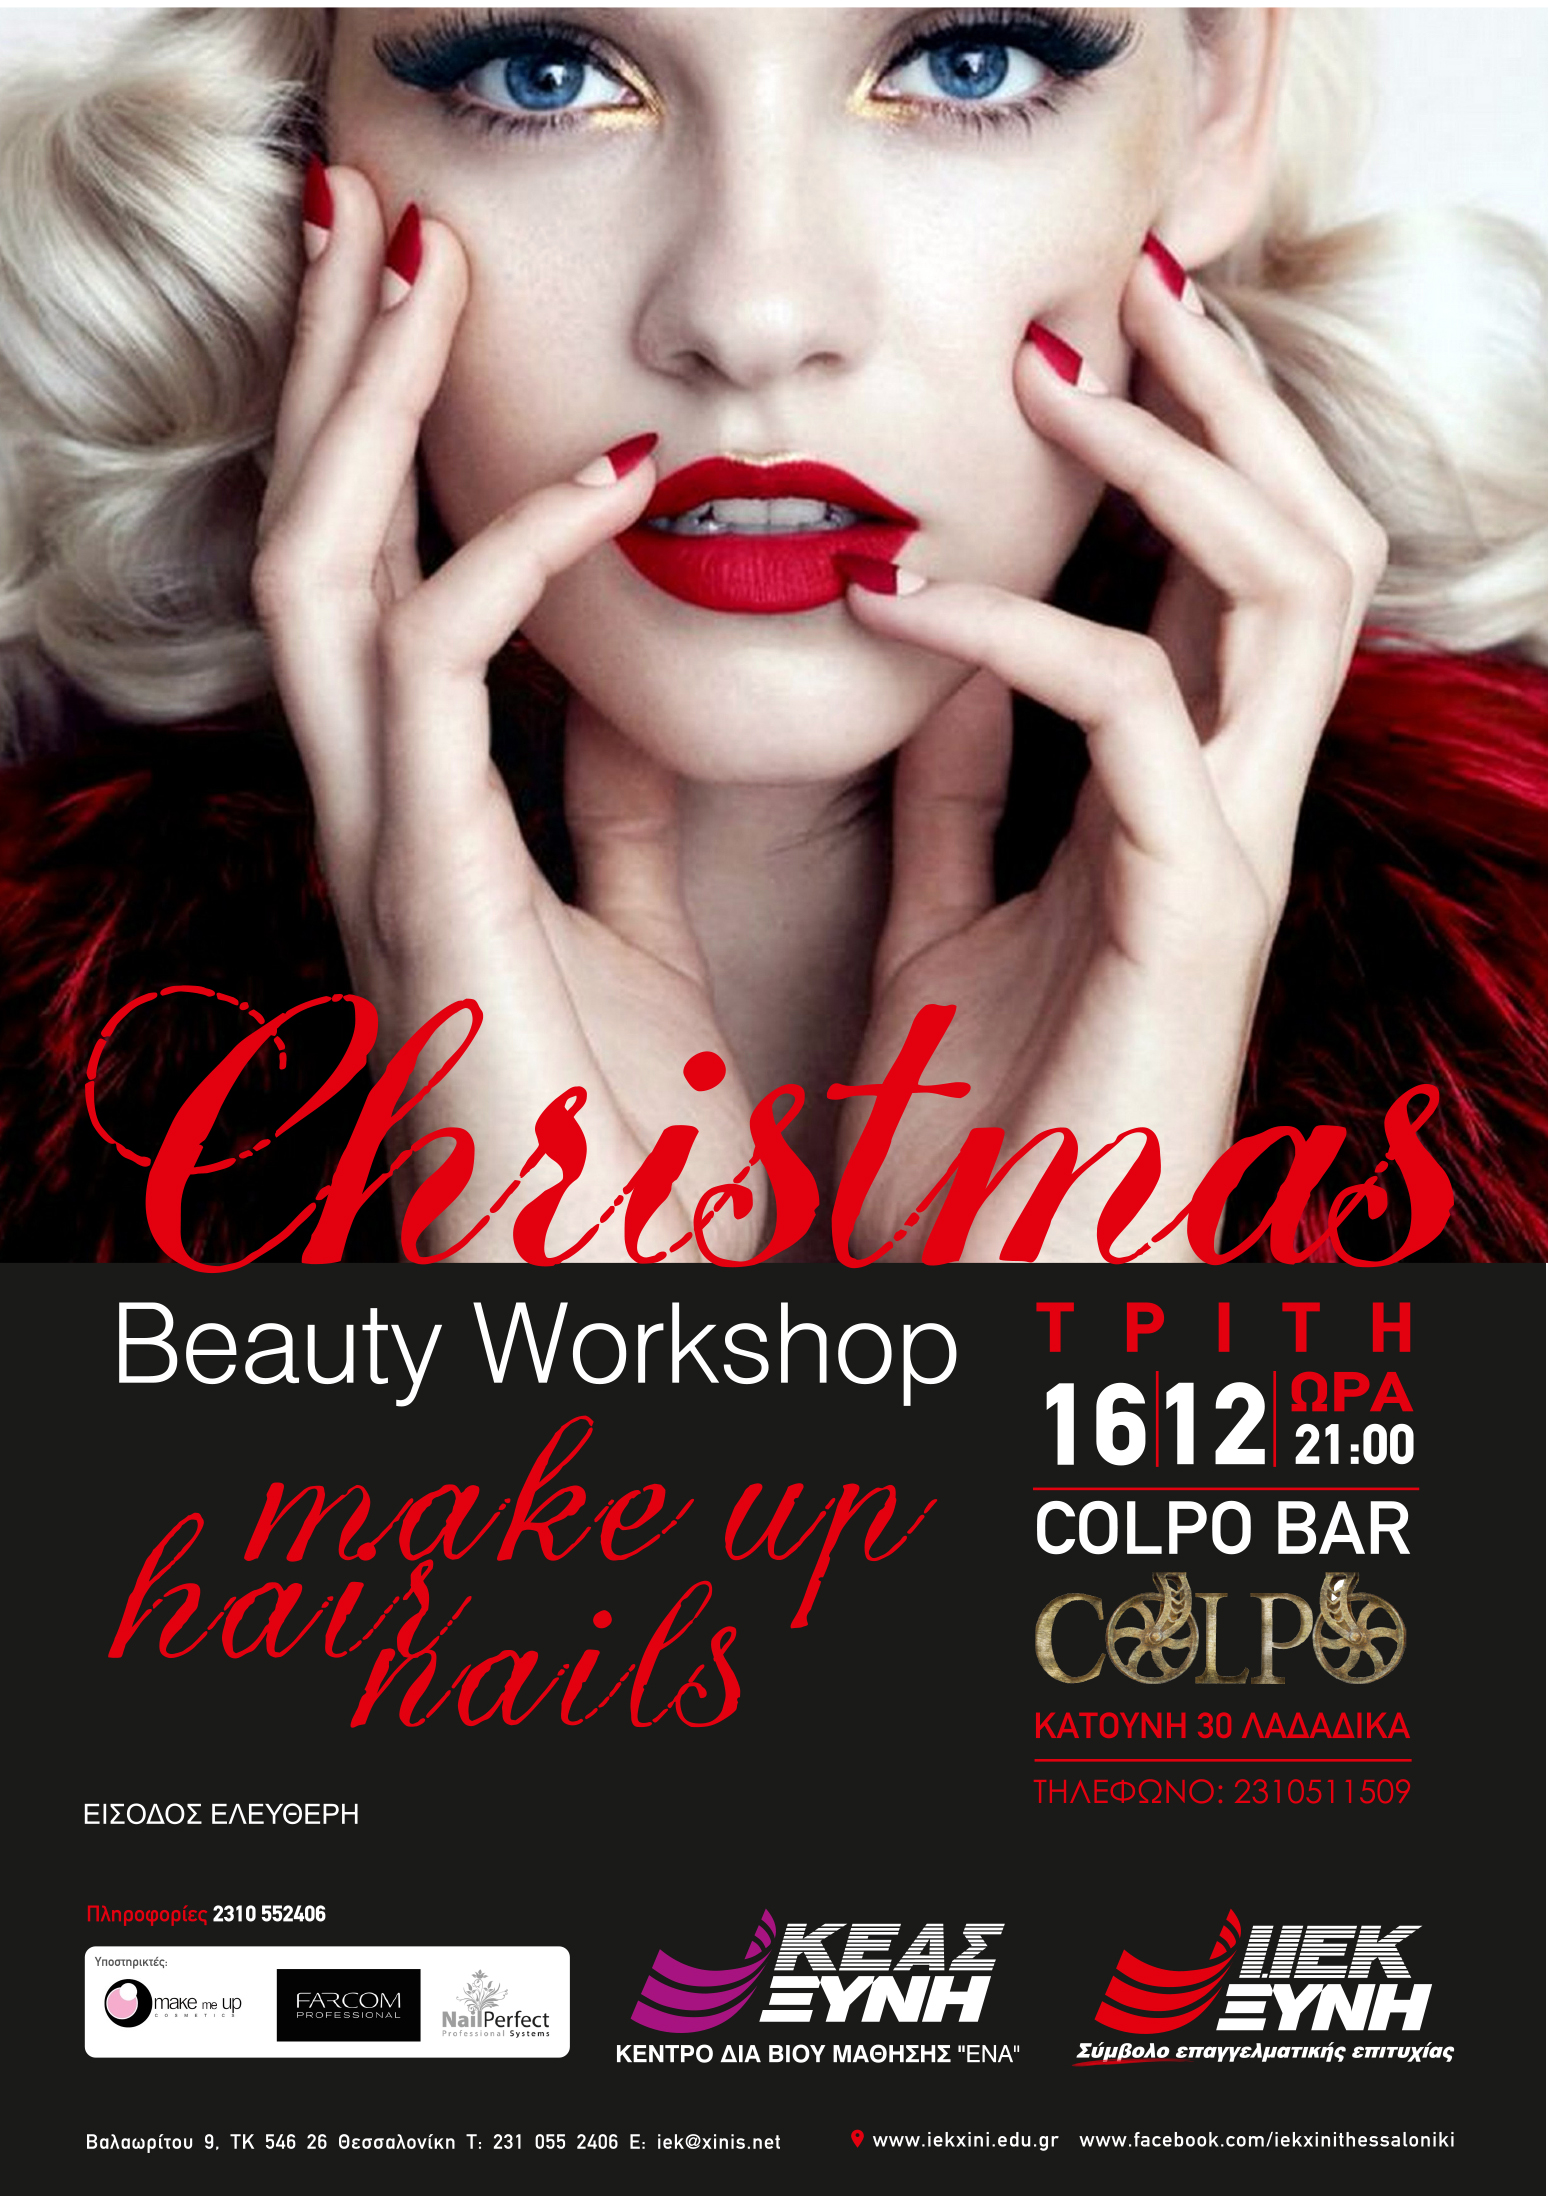 CHRISTMAS BEAUTY WORKSHOP Make up – Hair – Nails ΤΡΙΤΗ 16 ΔΕΚΕΜΒΡΙΟΥ COLPO BAR